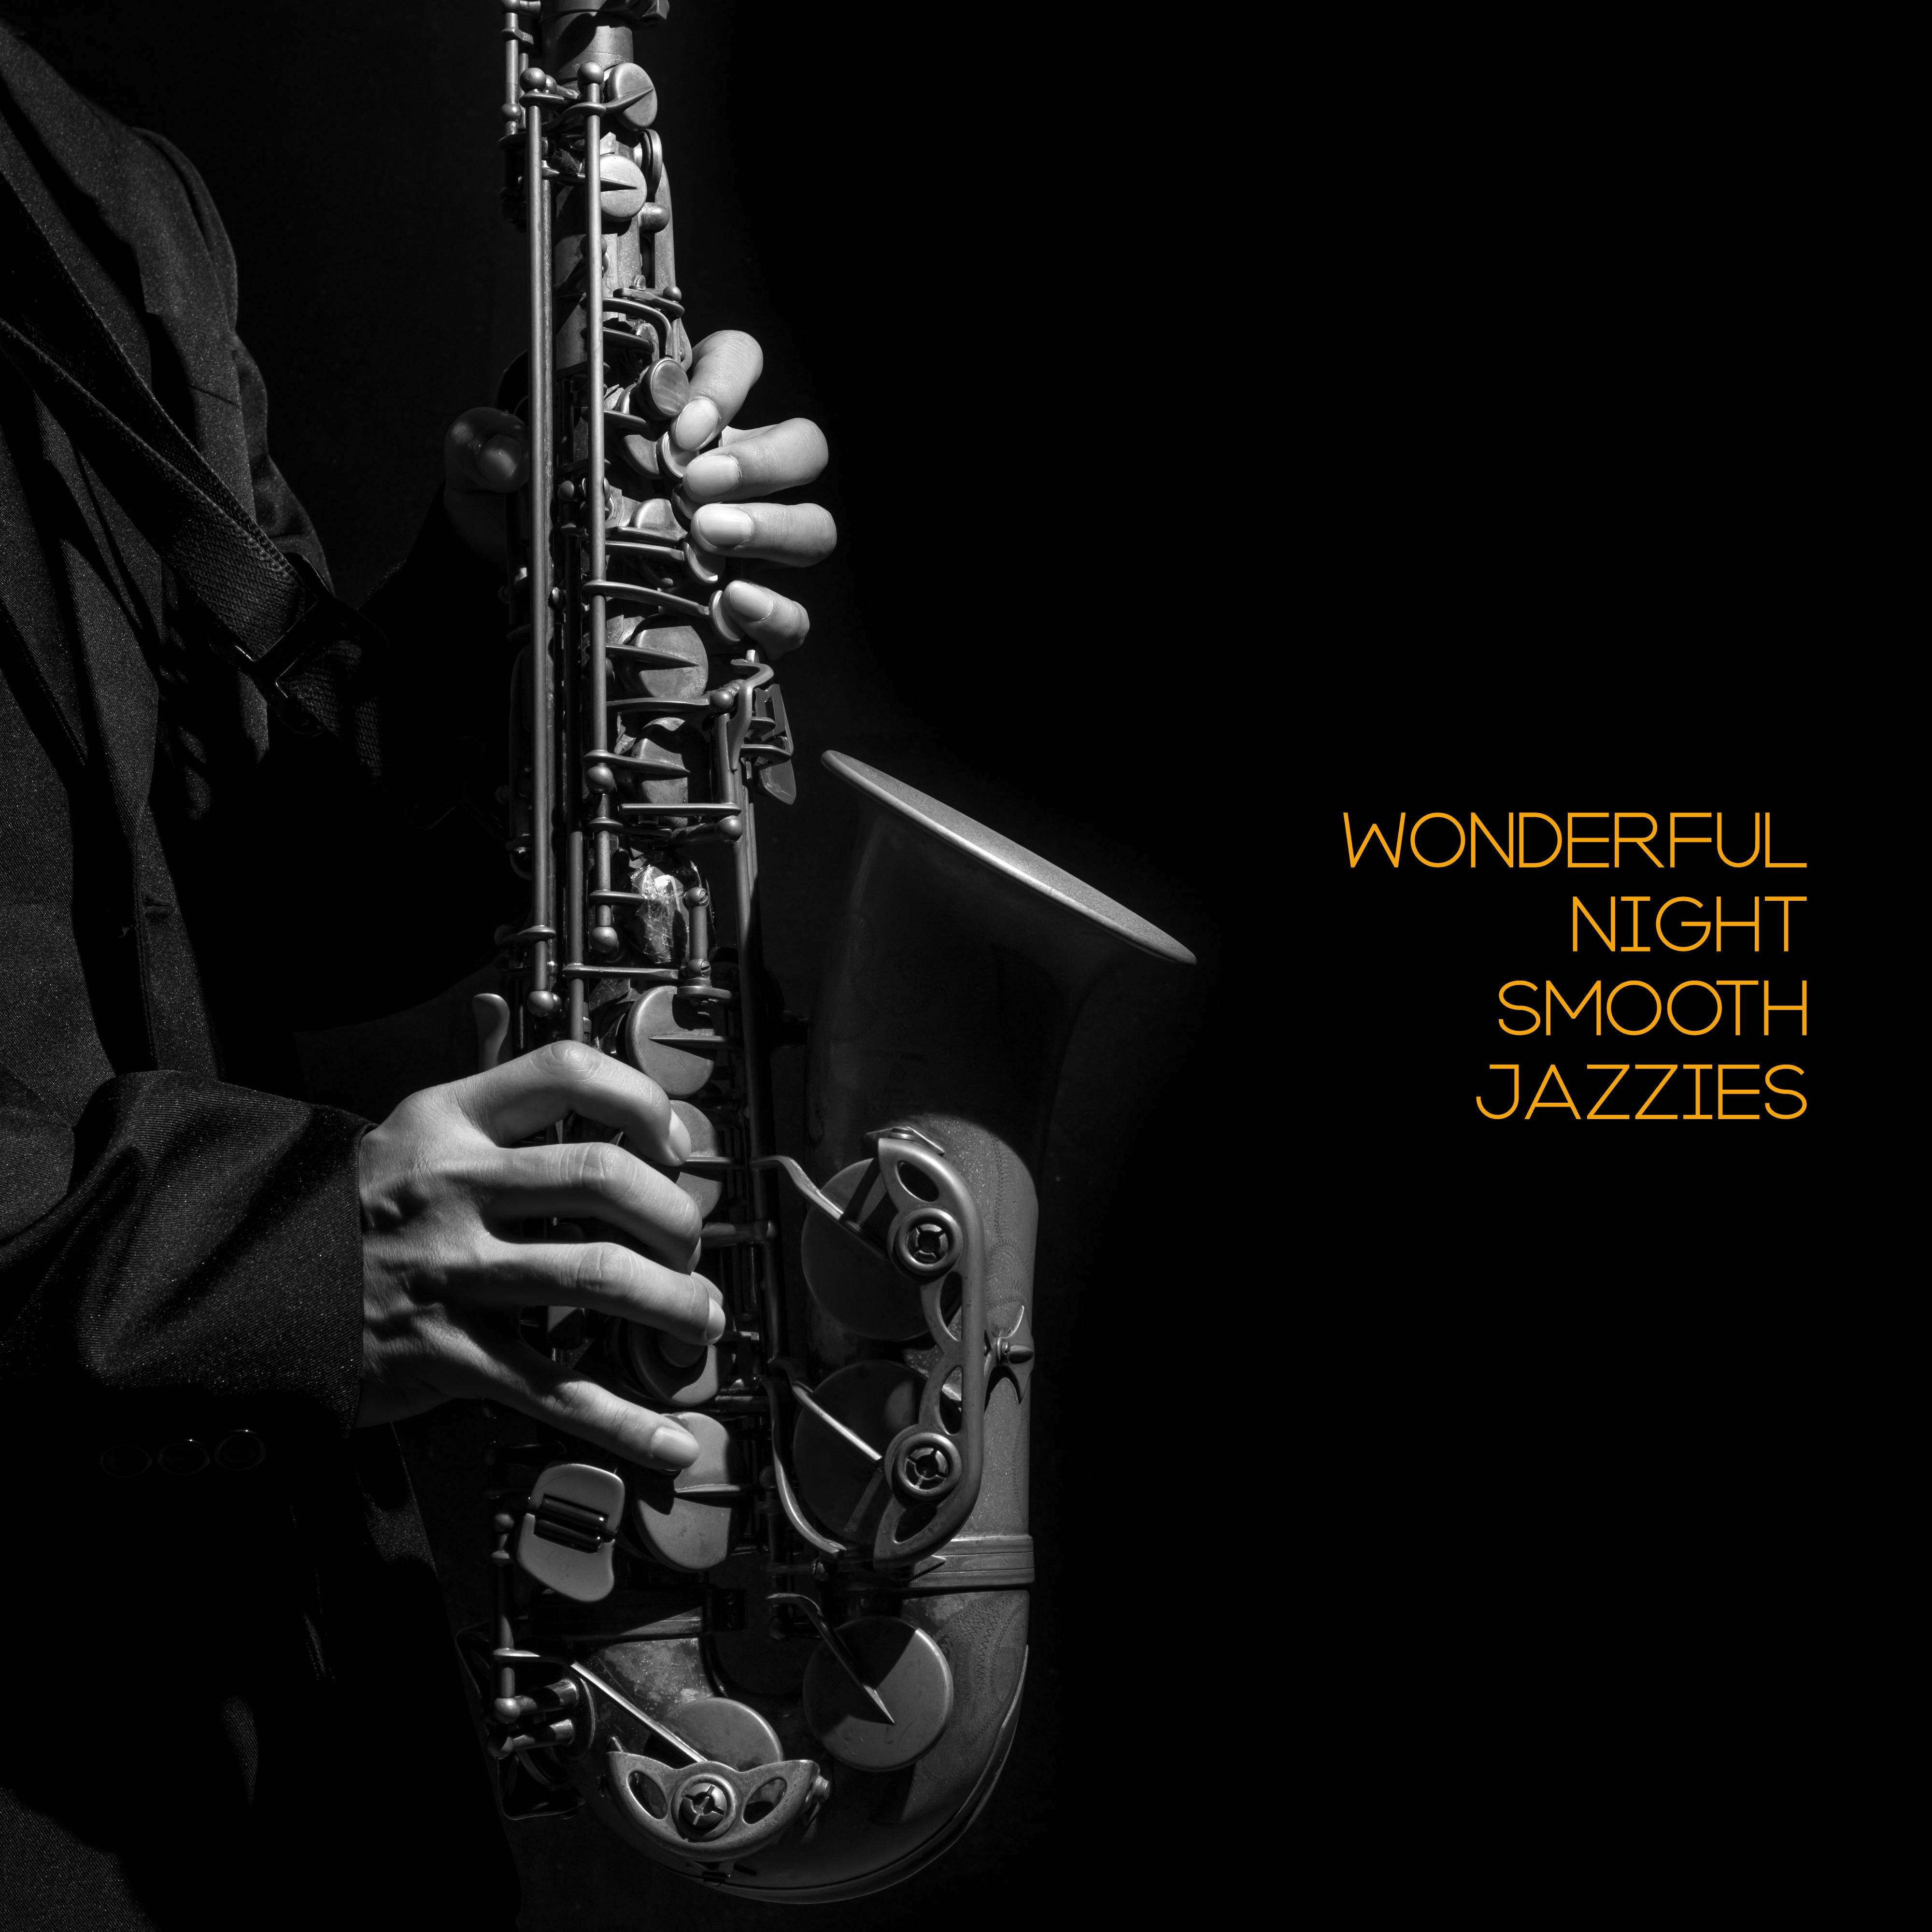 Wonderful Night Smooth Jazzies: 2019 Music Compilation of Best Smooth Instrumental Jazz Songs